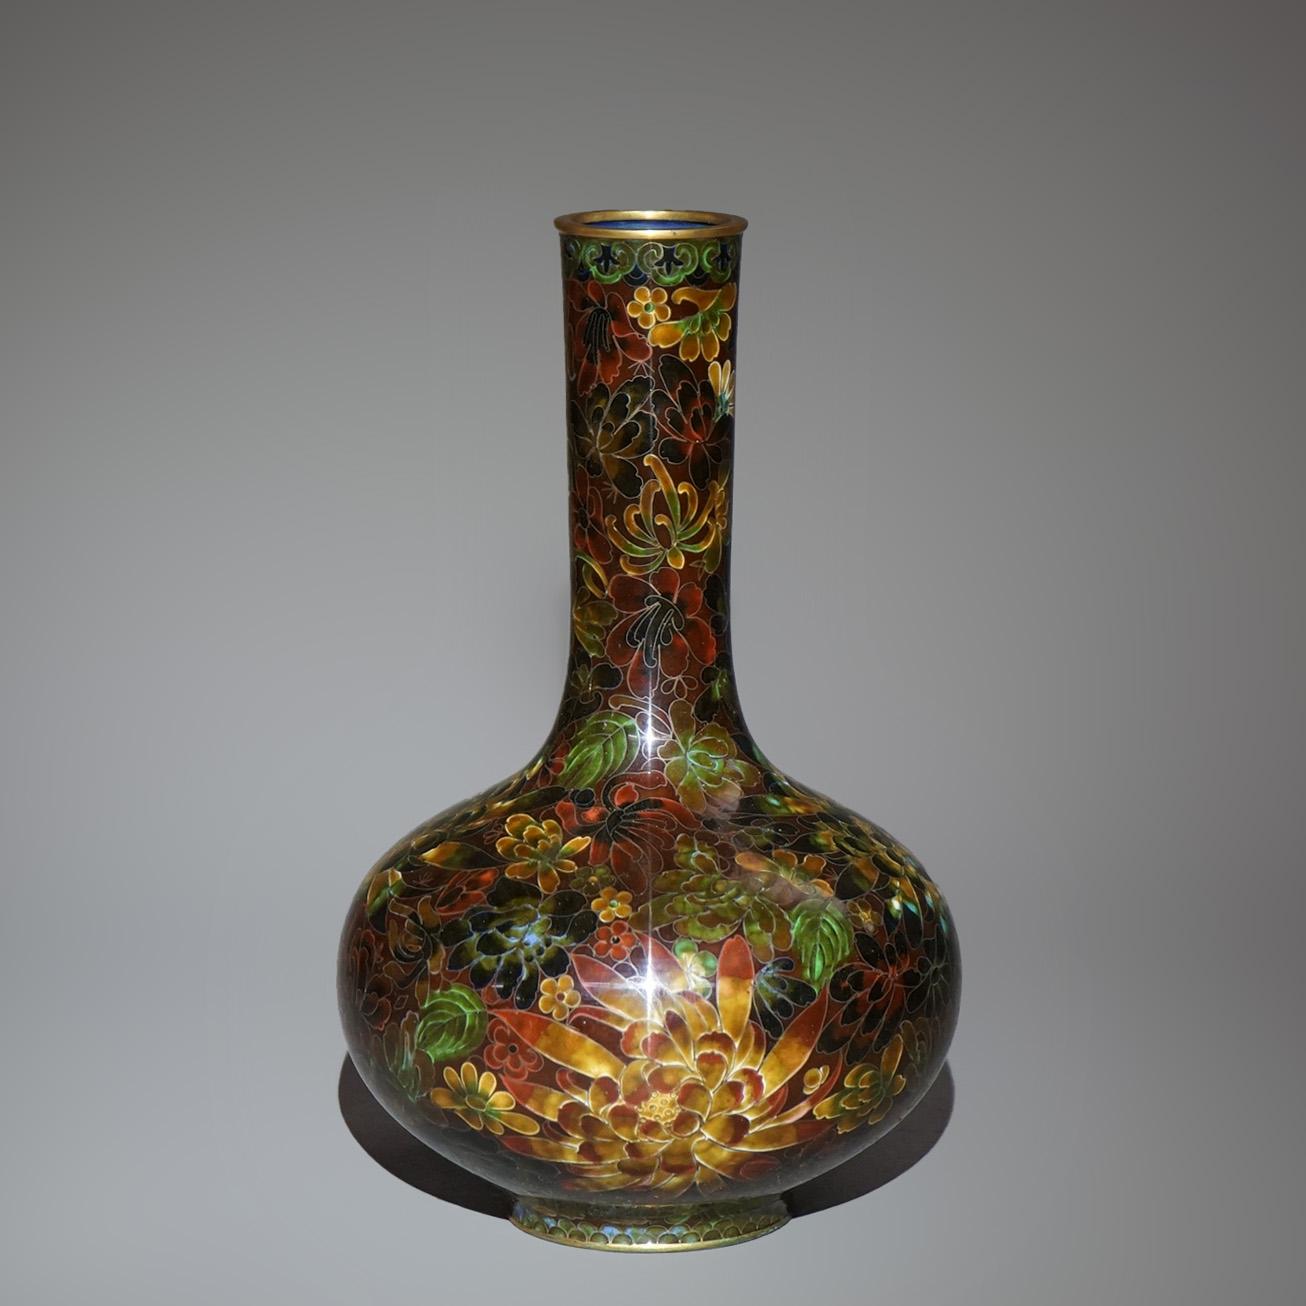 An antique Japanese Meiji vase offers metal construction with allover Cloisonne enameled floral design, 19thC

Measures - 122.25